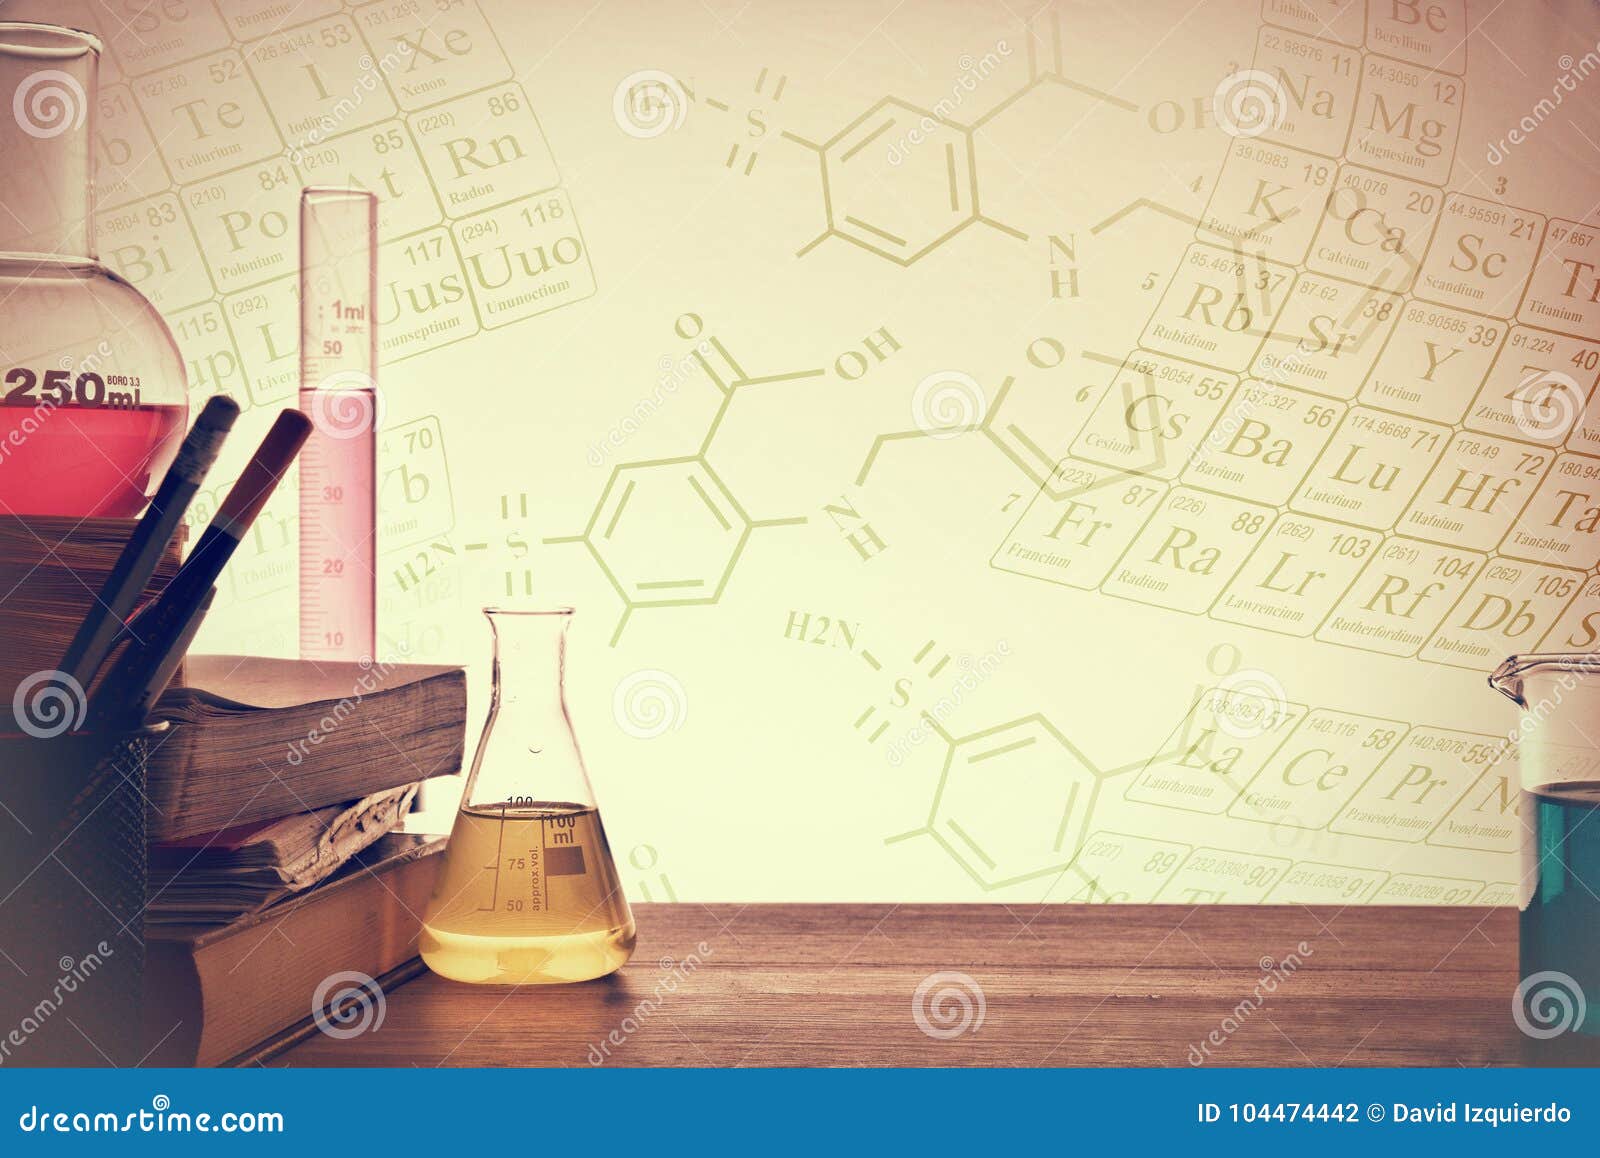 classroom desk of chemistry teaching background